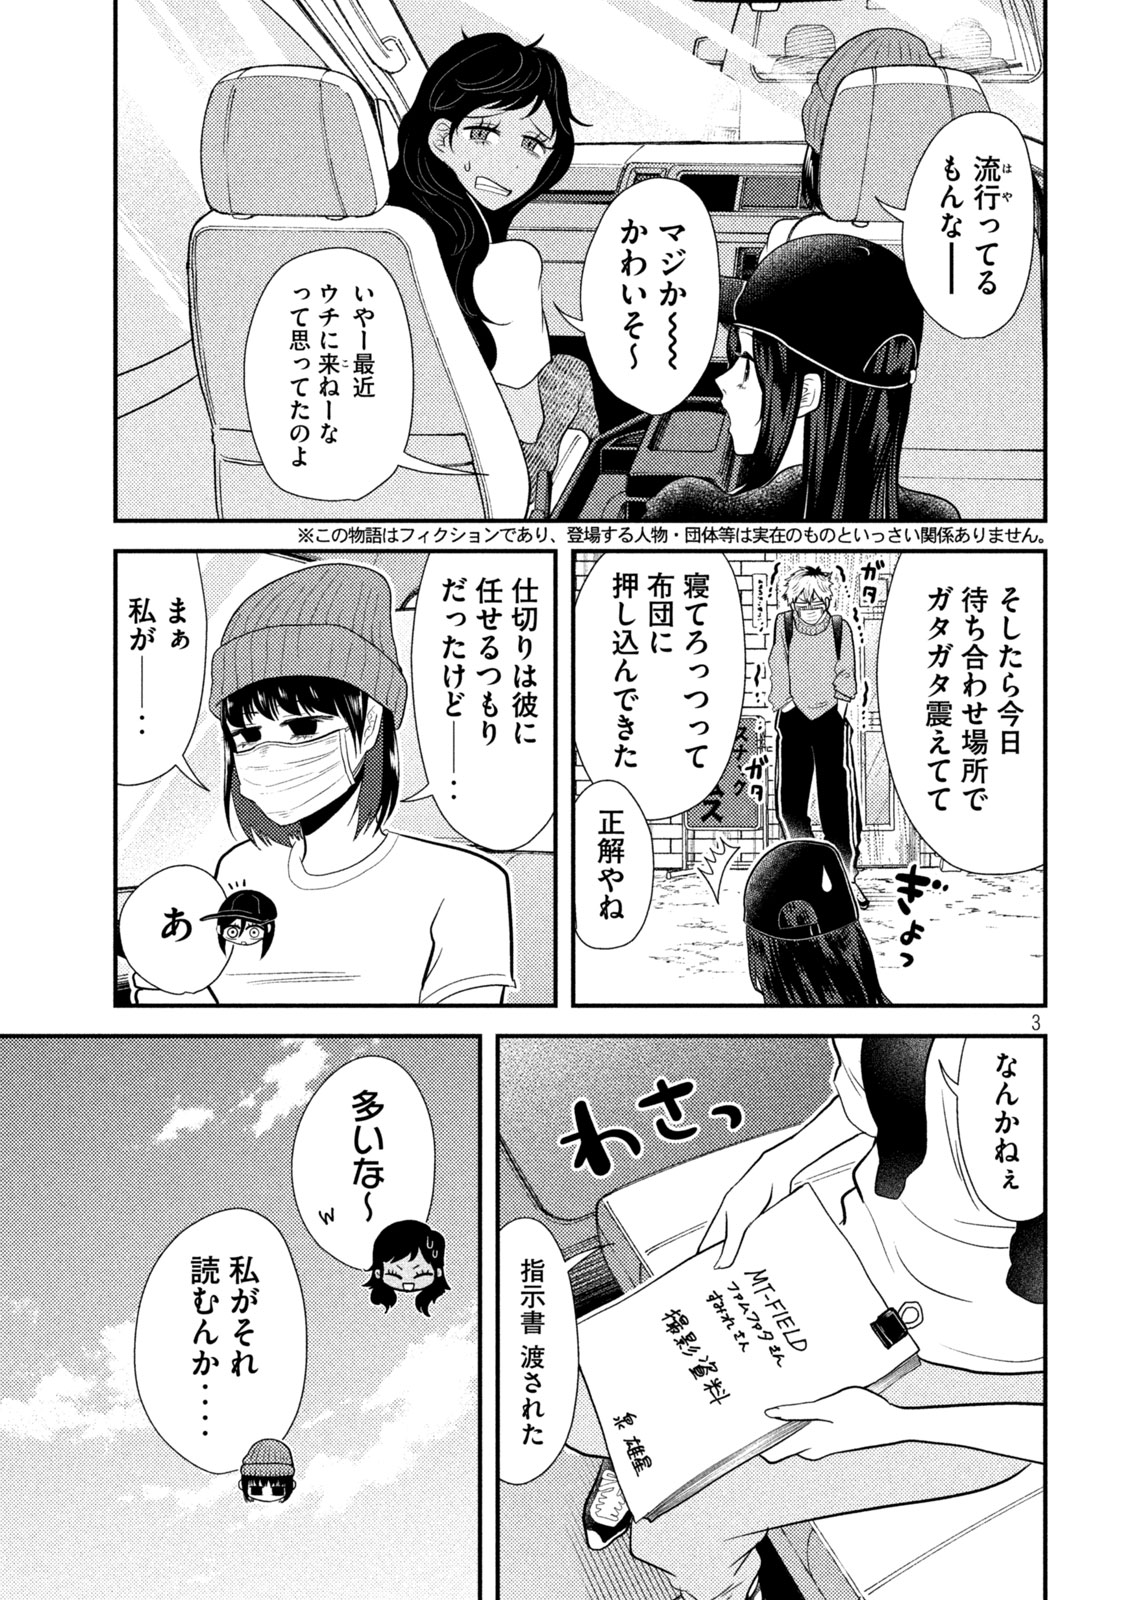 Heisei Haizanhei Sumire-chan - Chapter 10 - Page 3